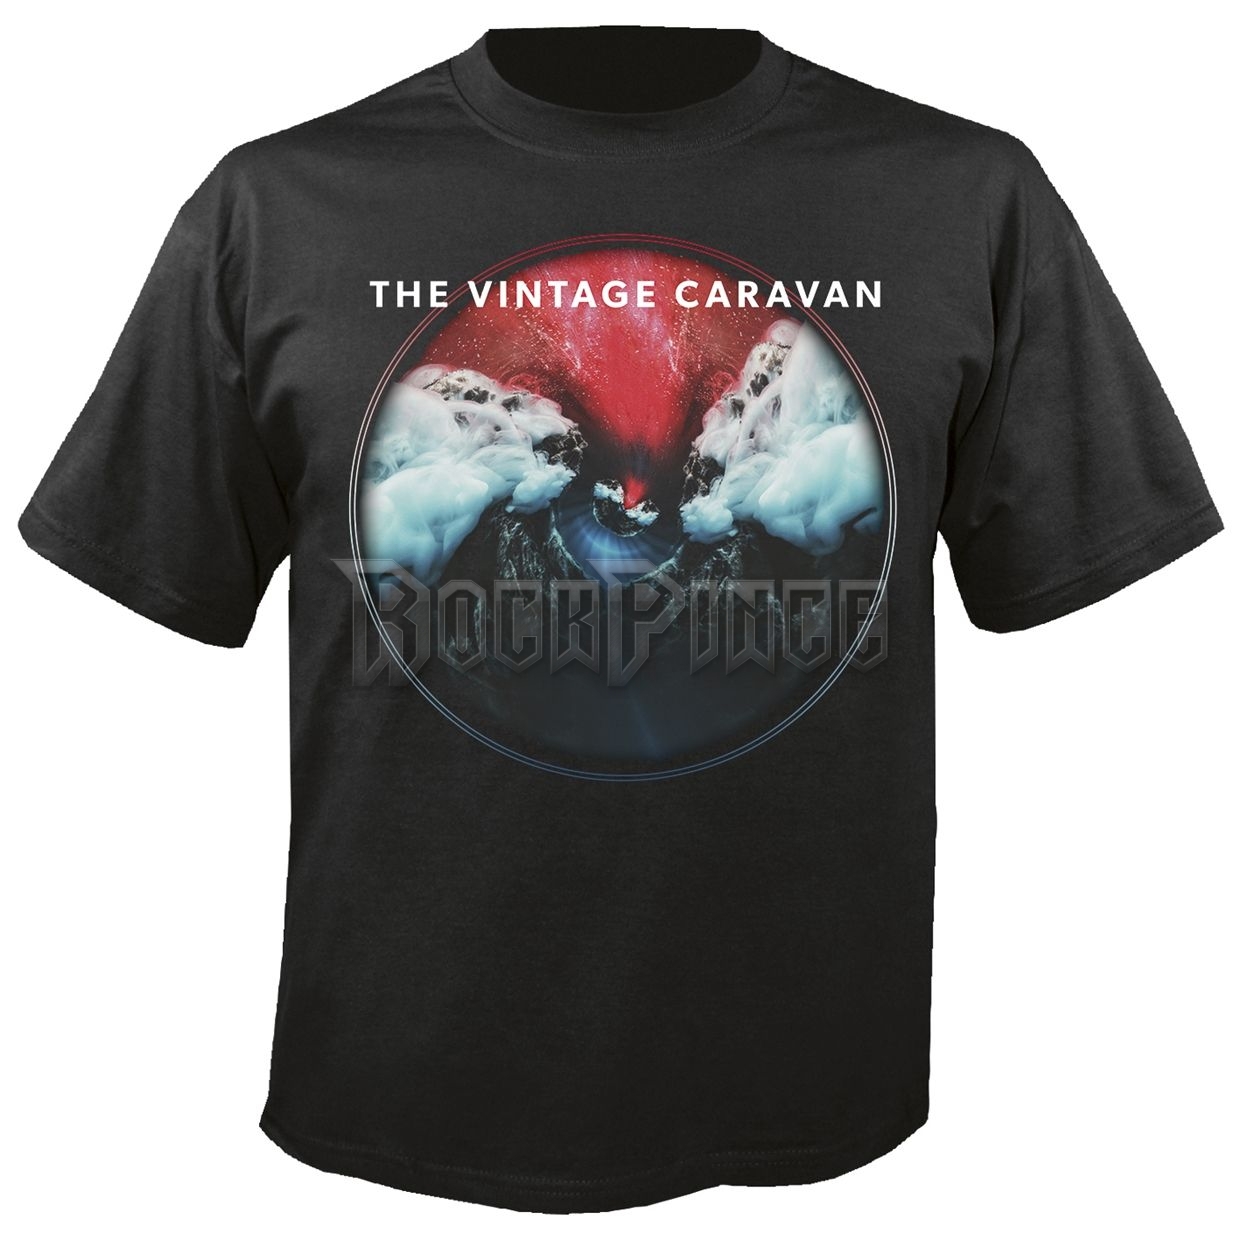 VINTAGE CARAVAN, THE - GATEWAYS - NBVCGATE